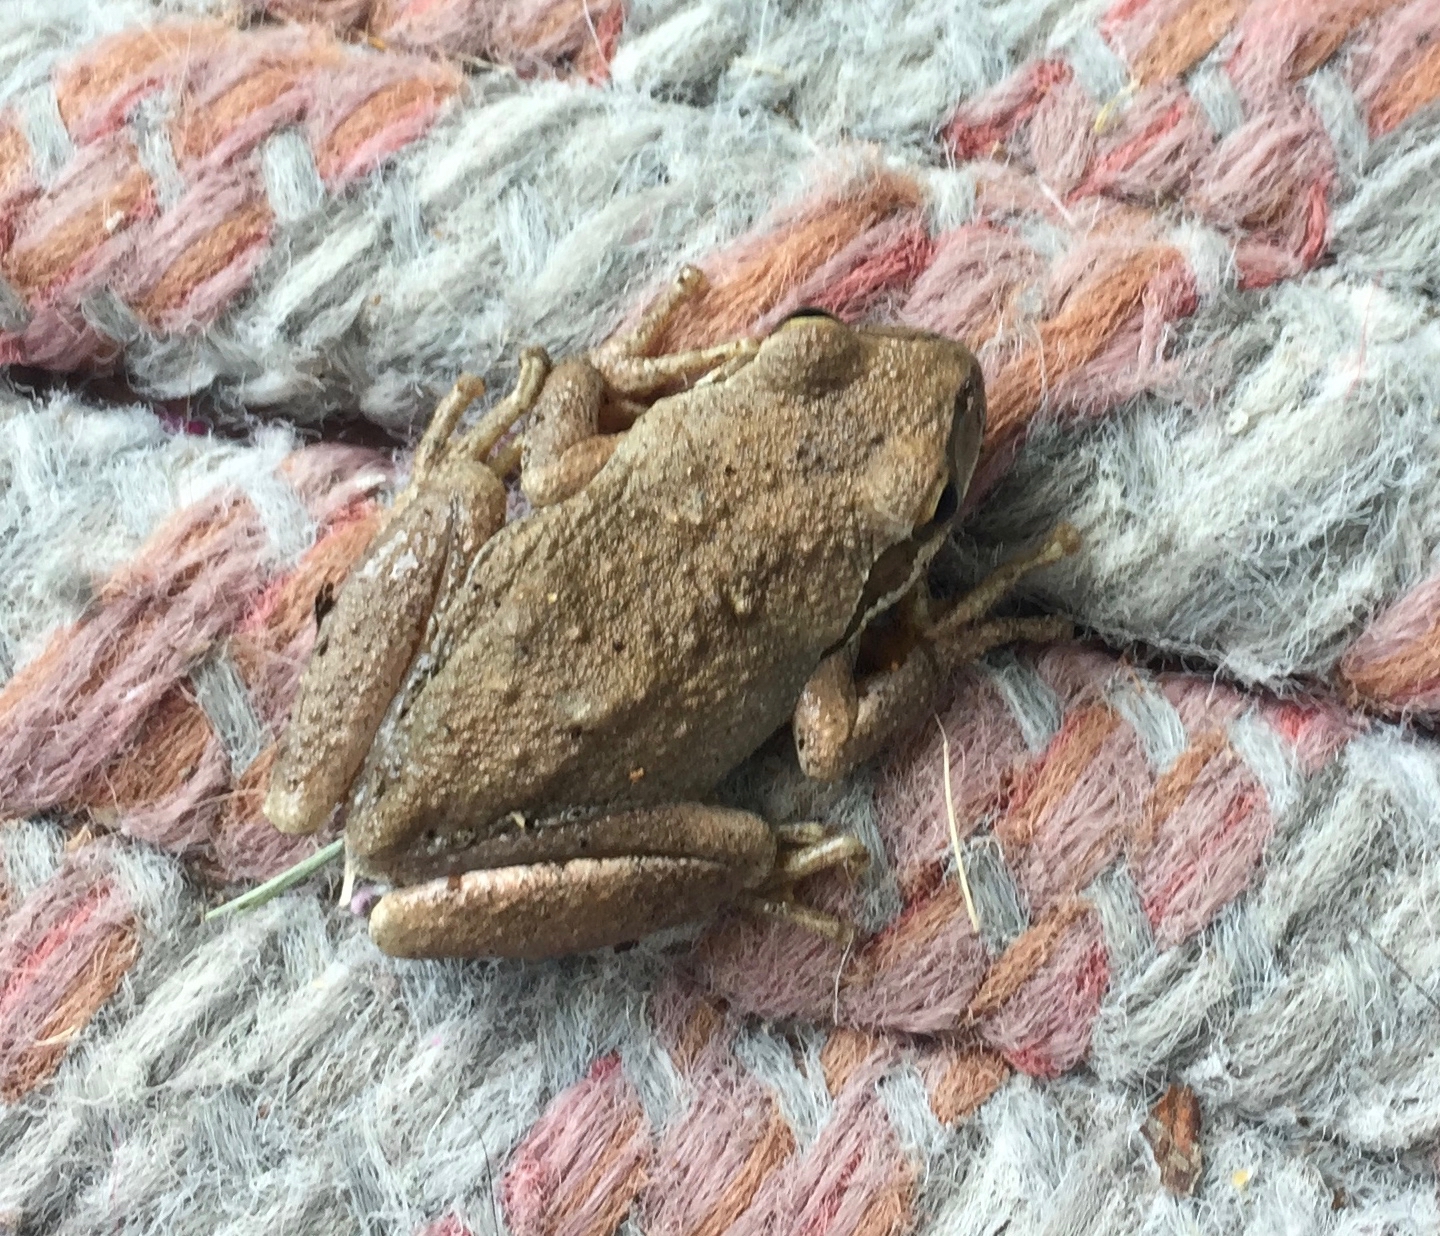 frog on patio rug.jpg